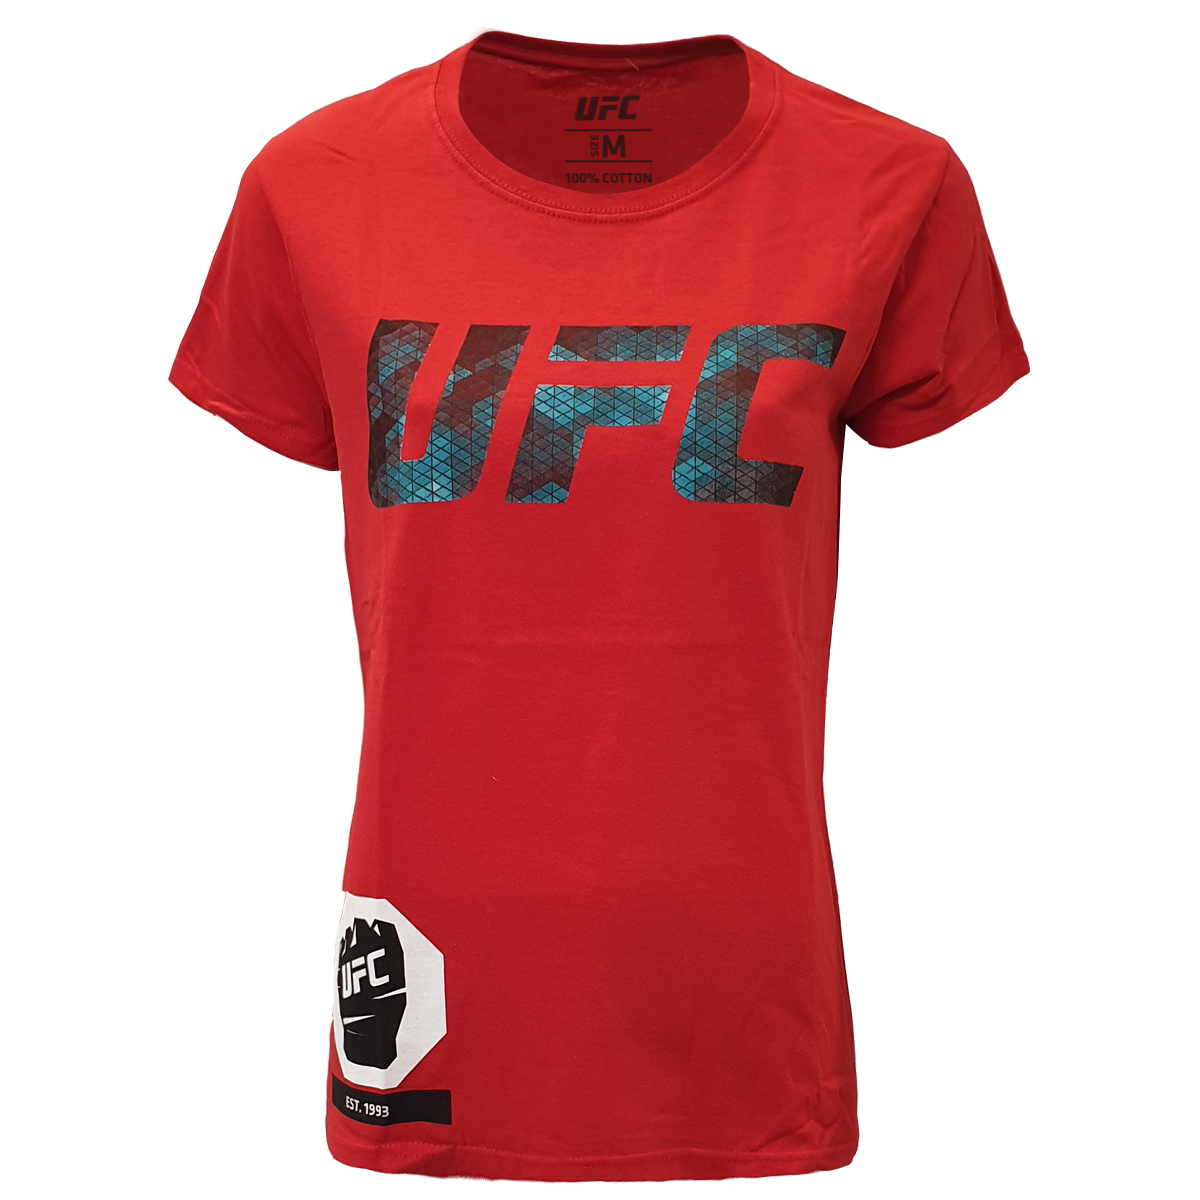 Reebok UFC logo t-shirt in red